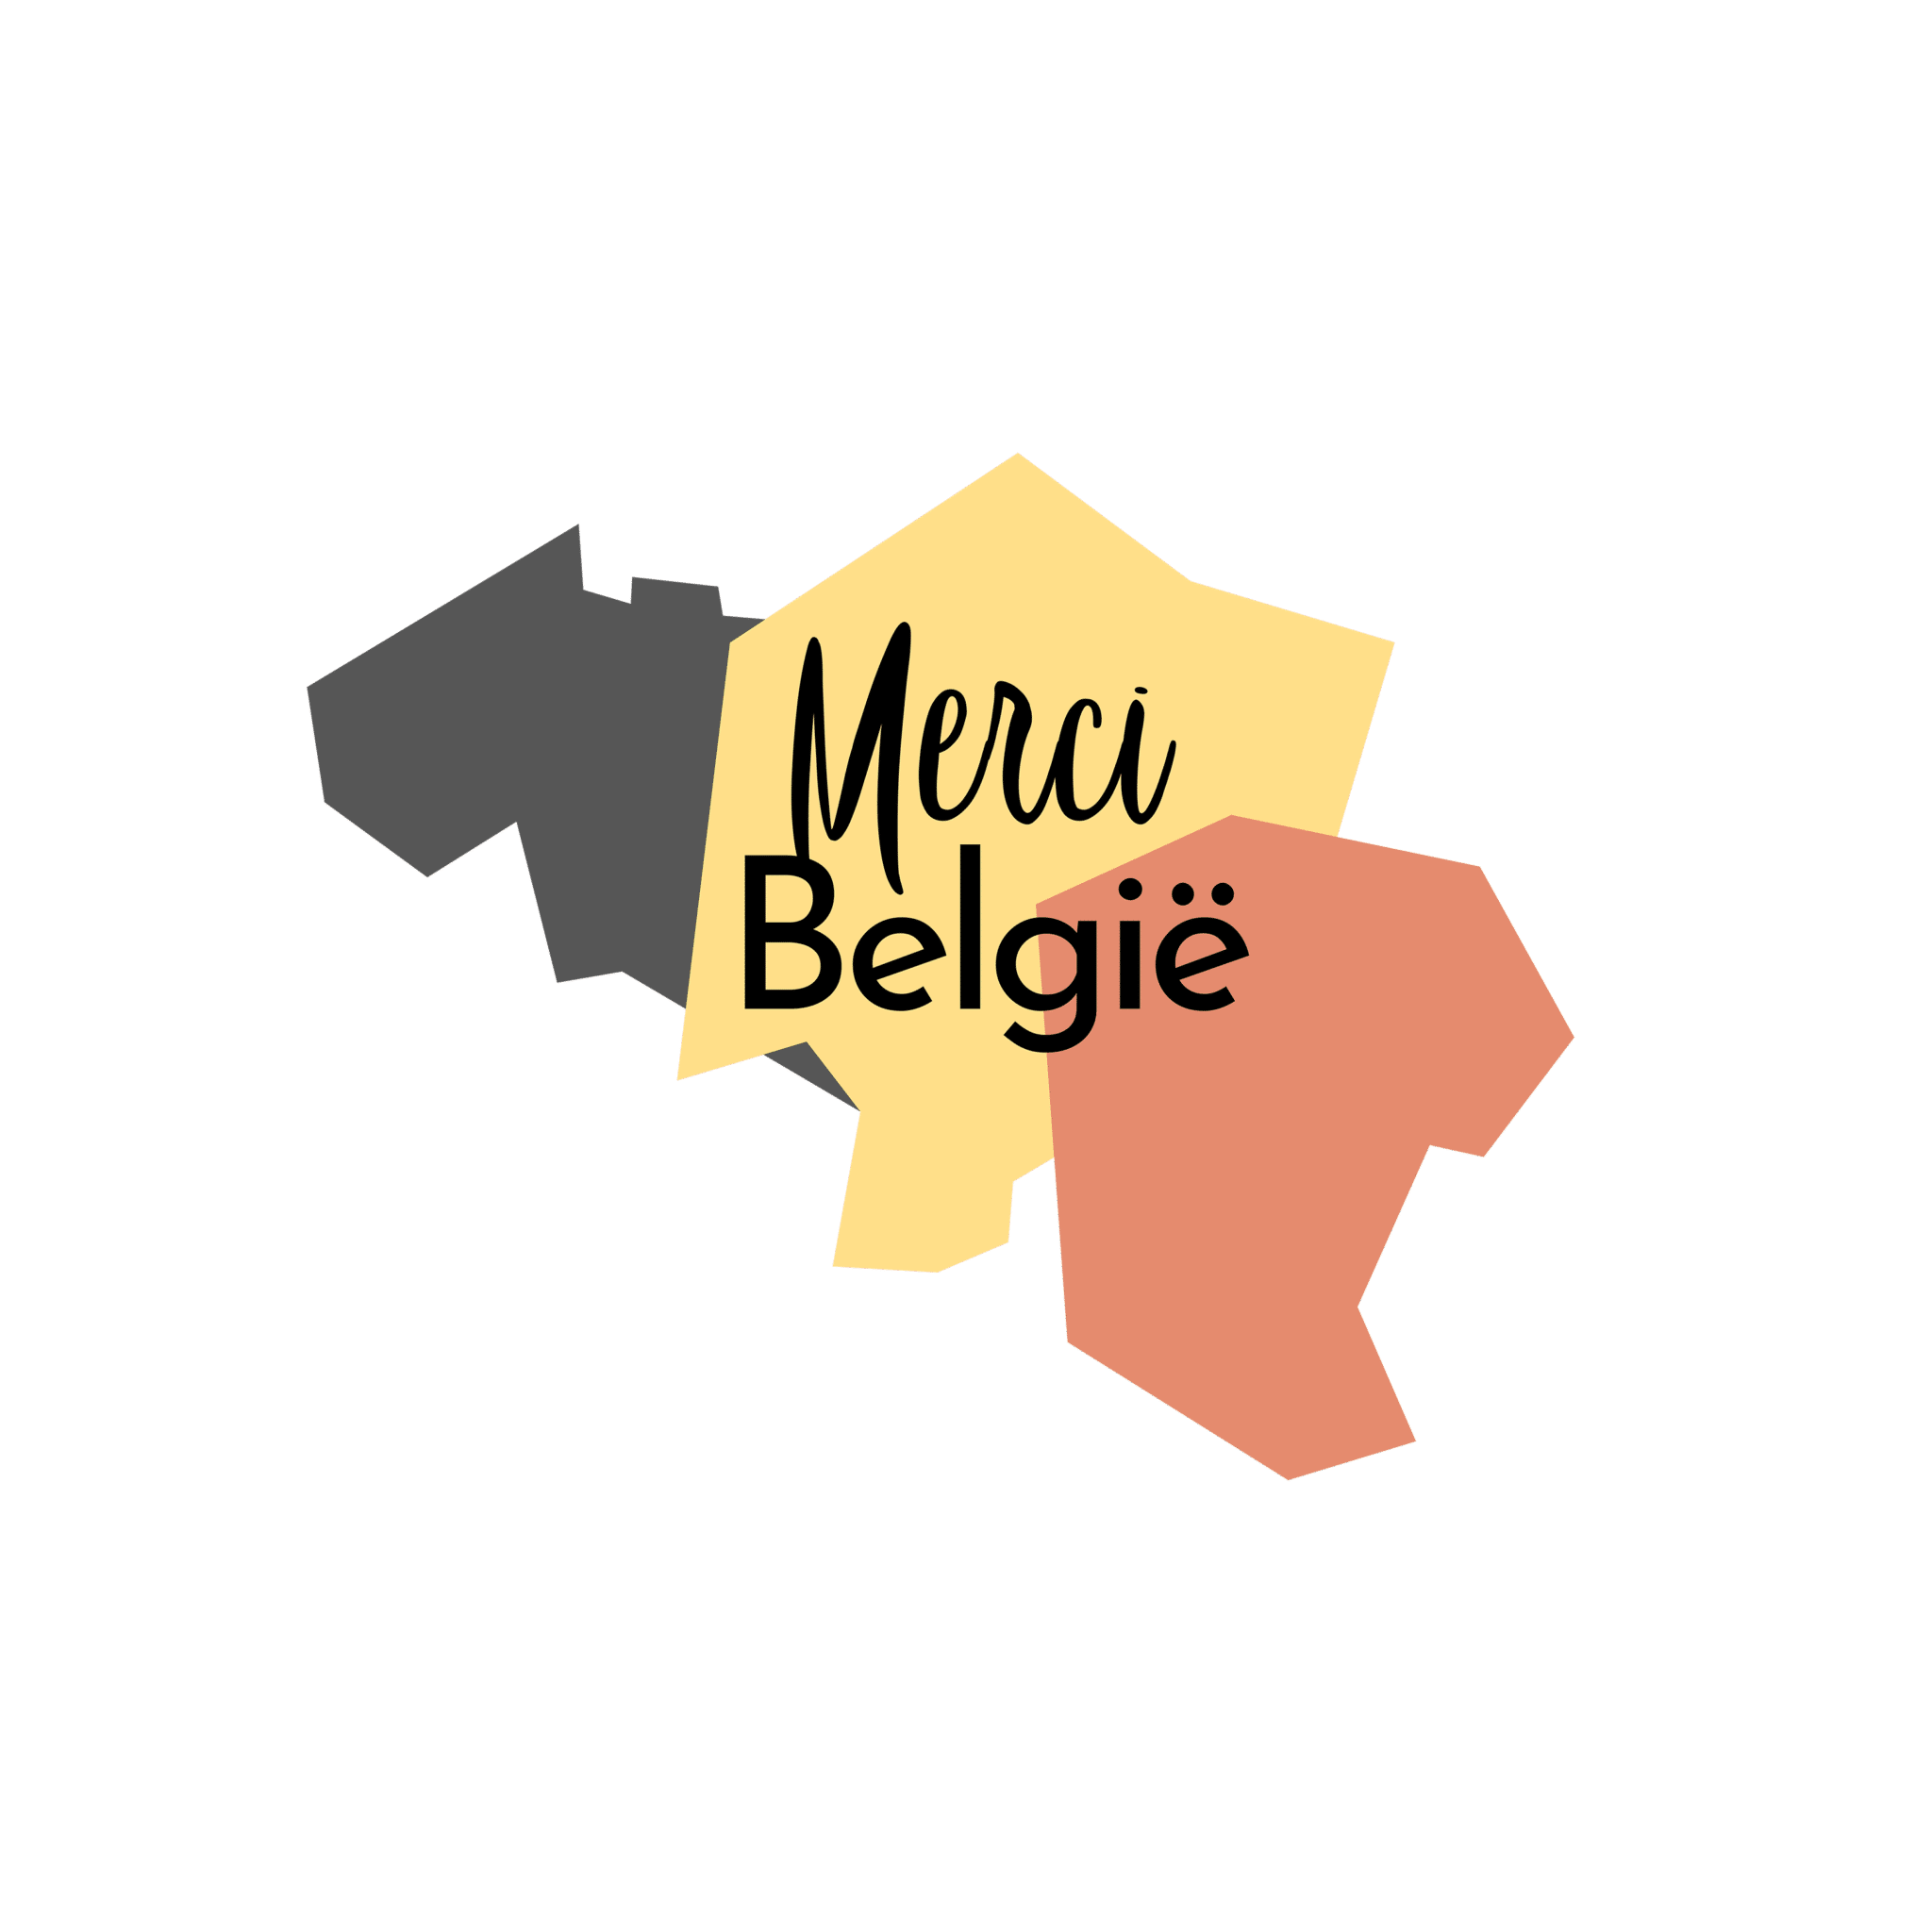 Merci België